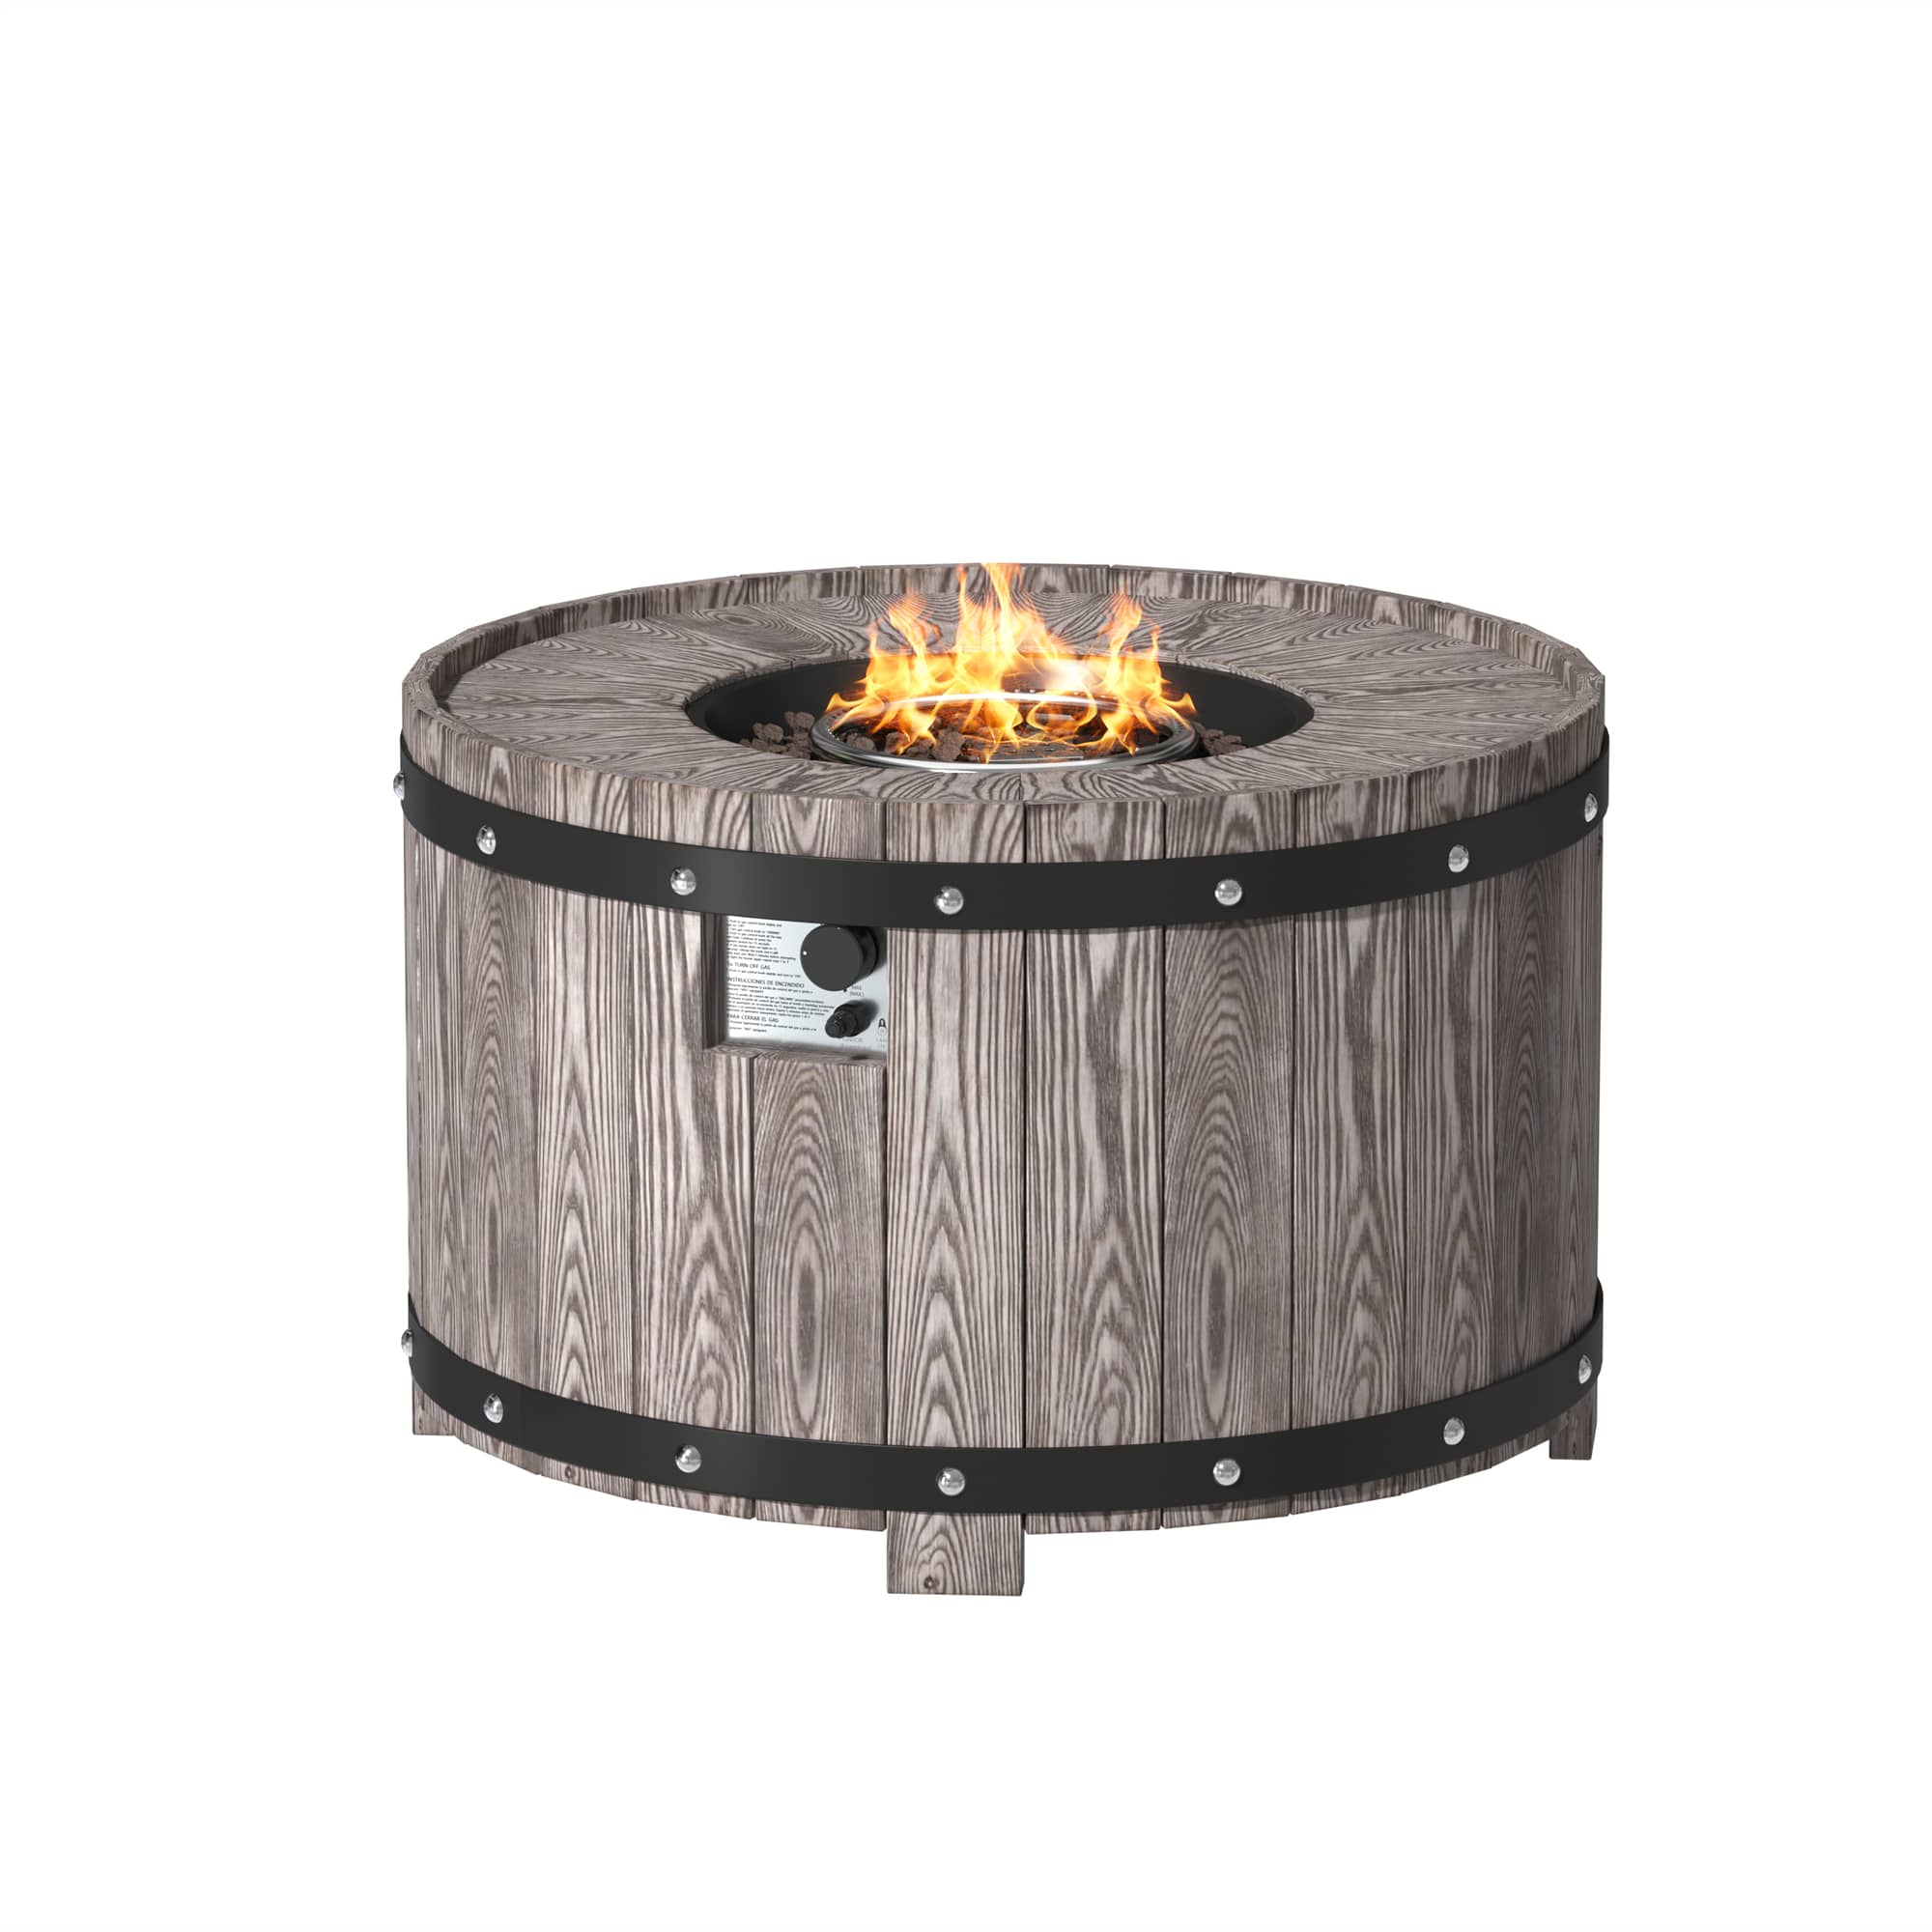 36-inch Round Fire Table,50000 BTU  Steel Burner, Fits 20lb Internal gas tank